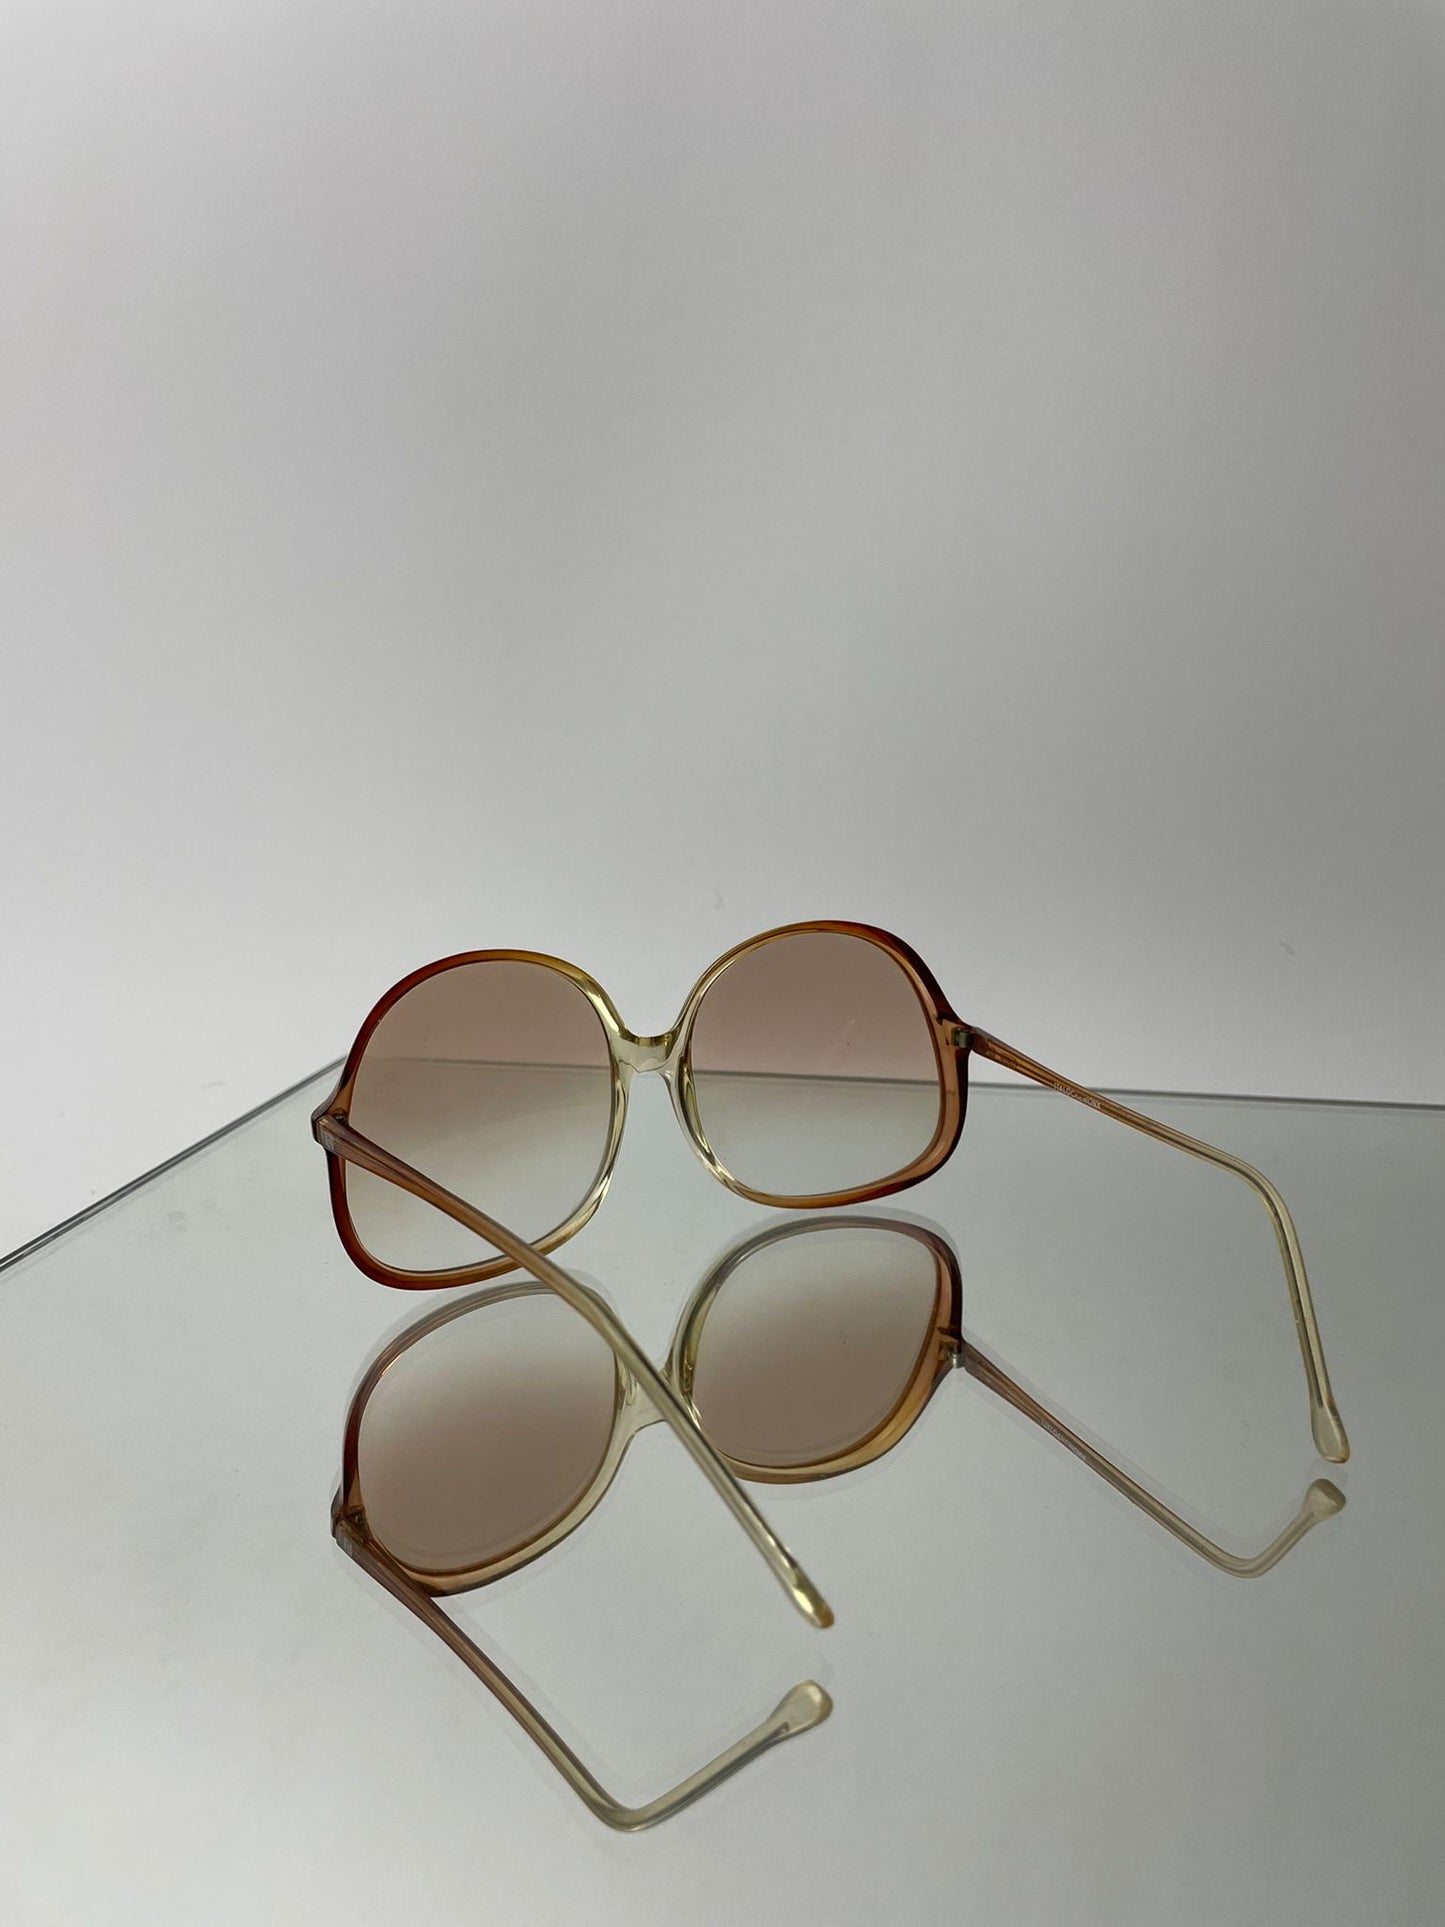 Sunglasses 1960s